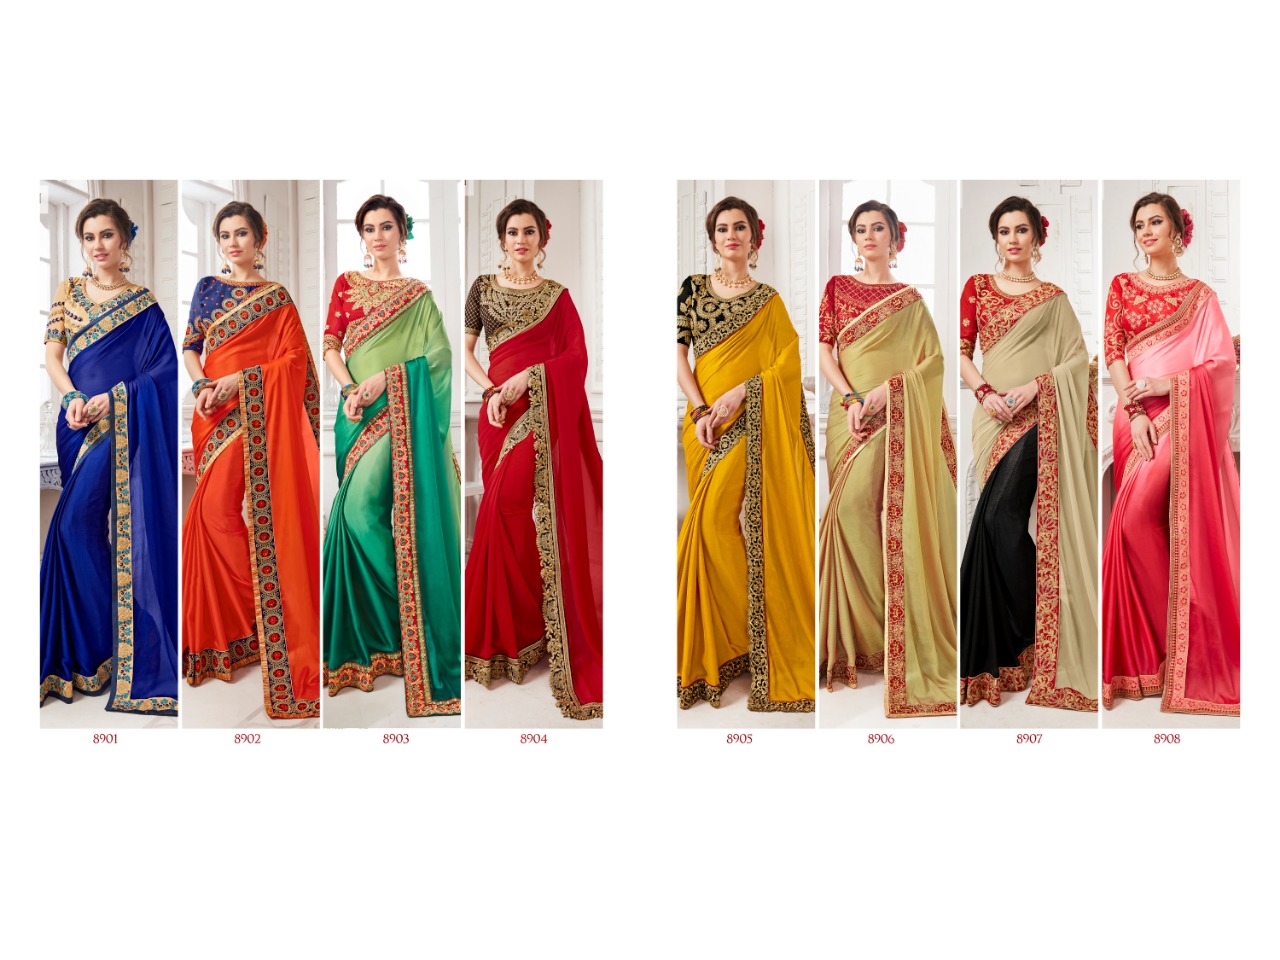 triveni dilruba colorful fancy collection of sarees